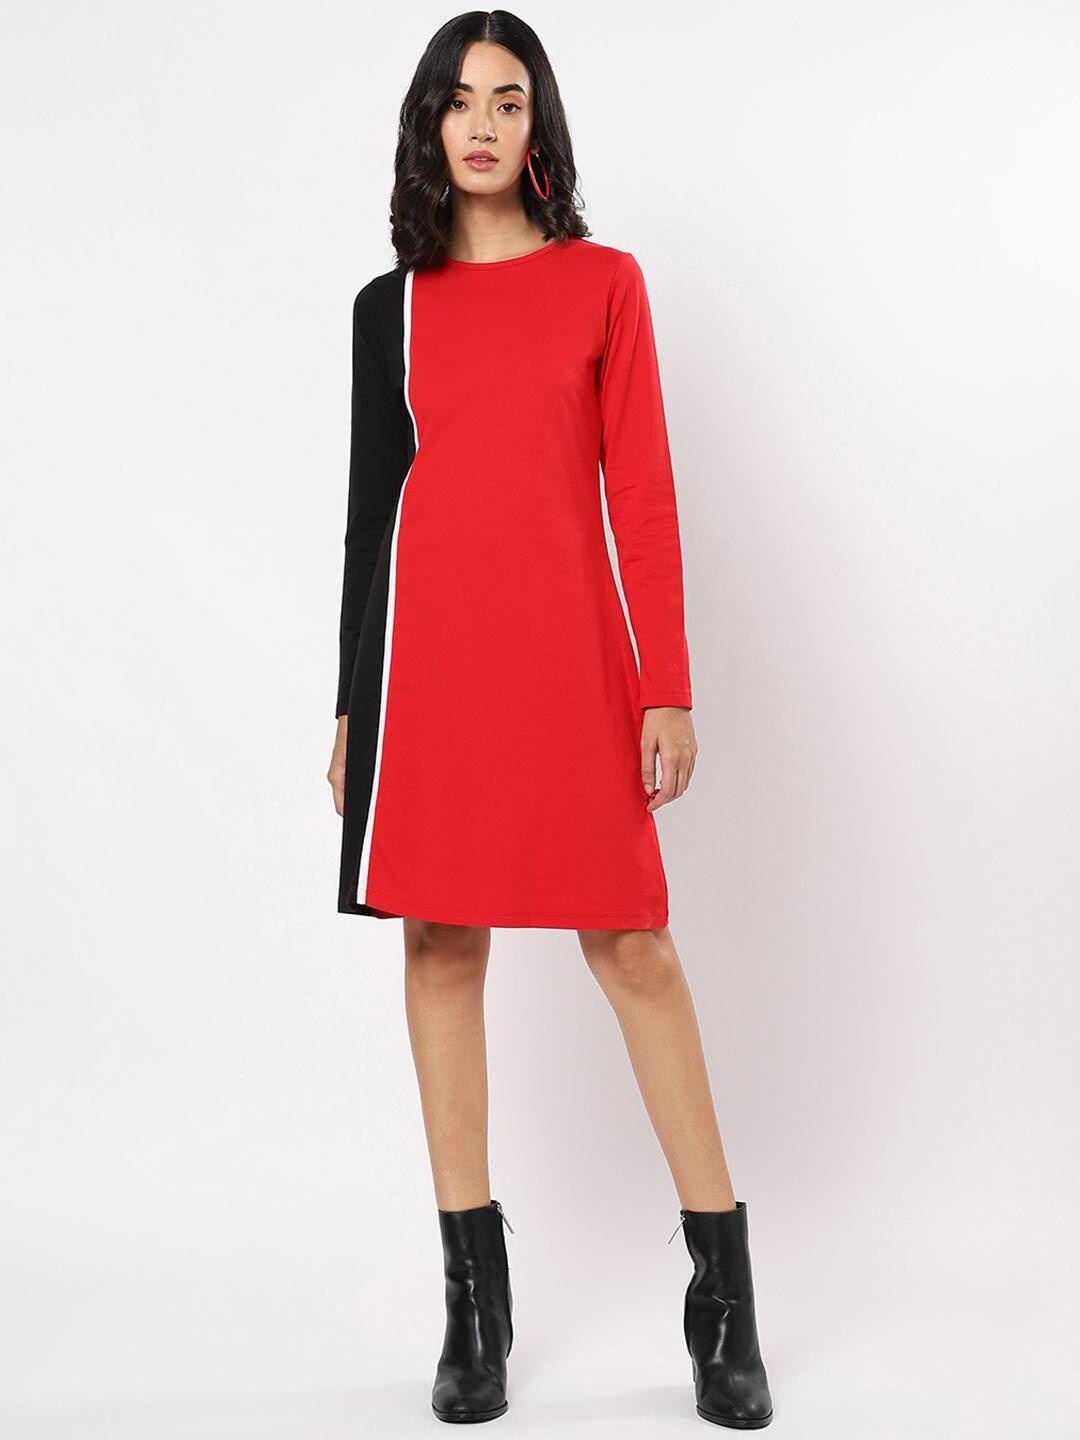 bewakoof-red-&-black-colourblocked-a-line-dress